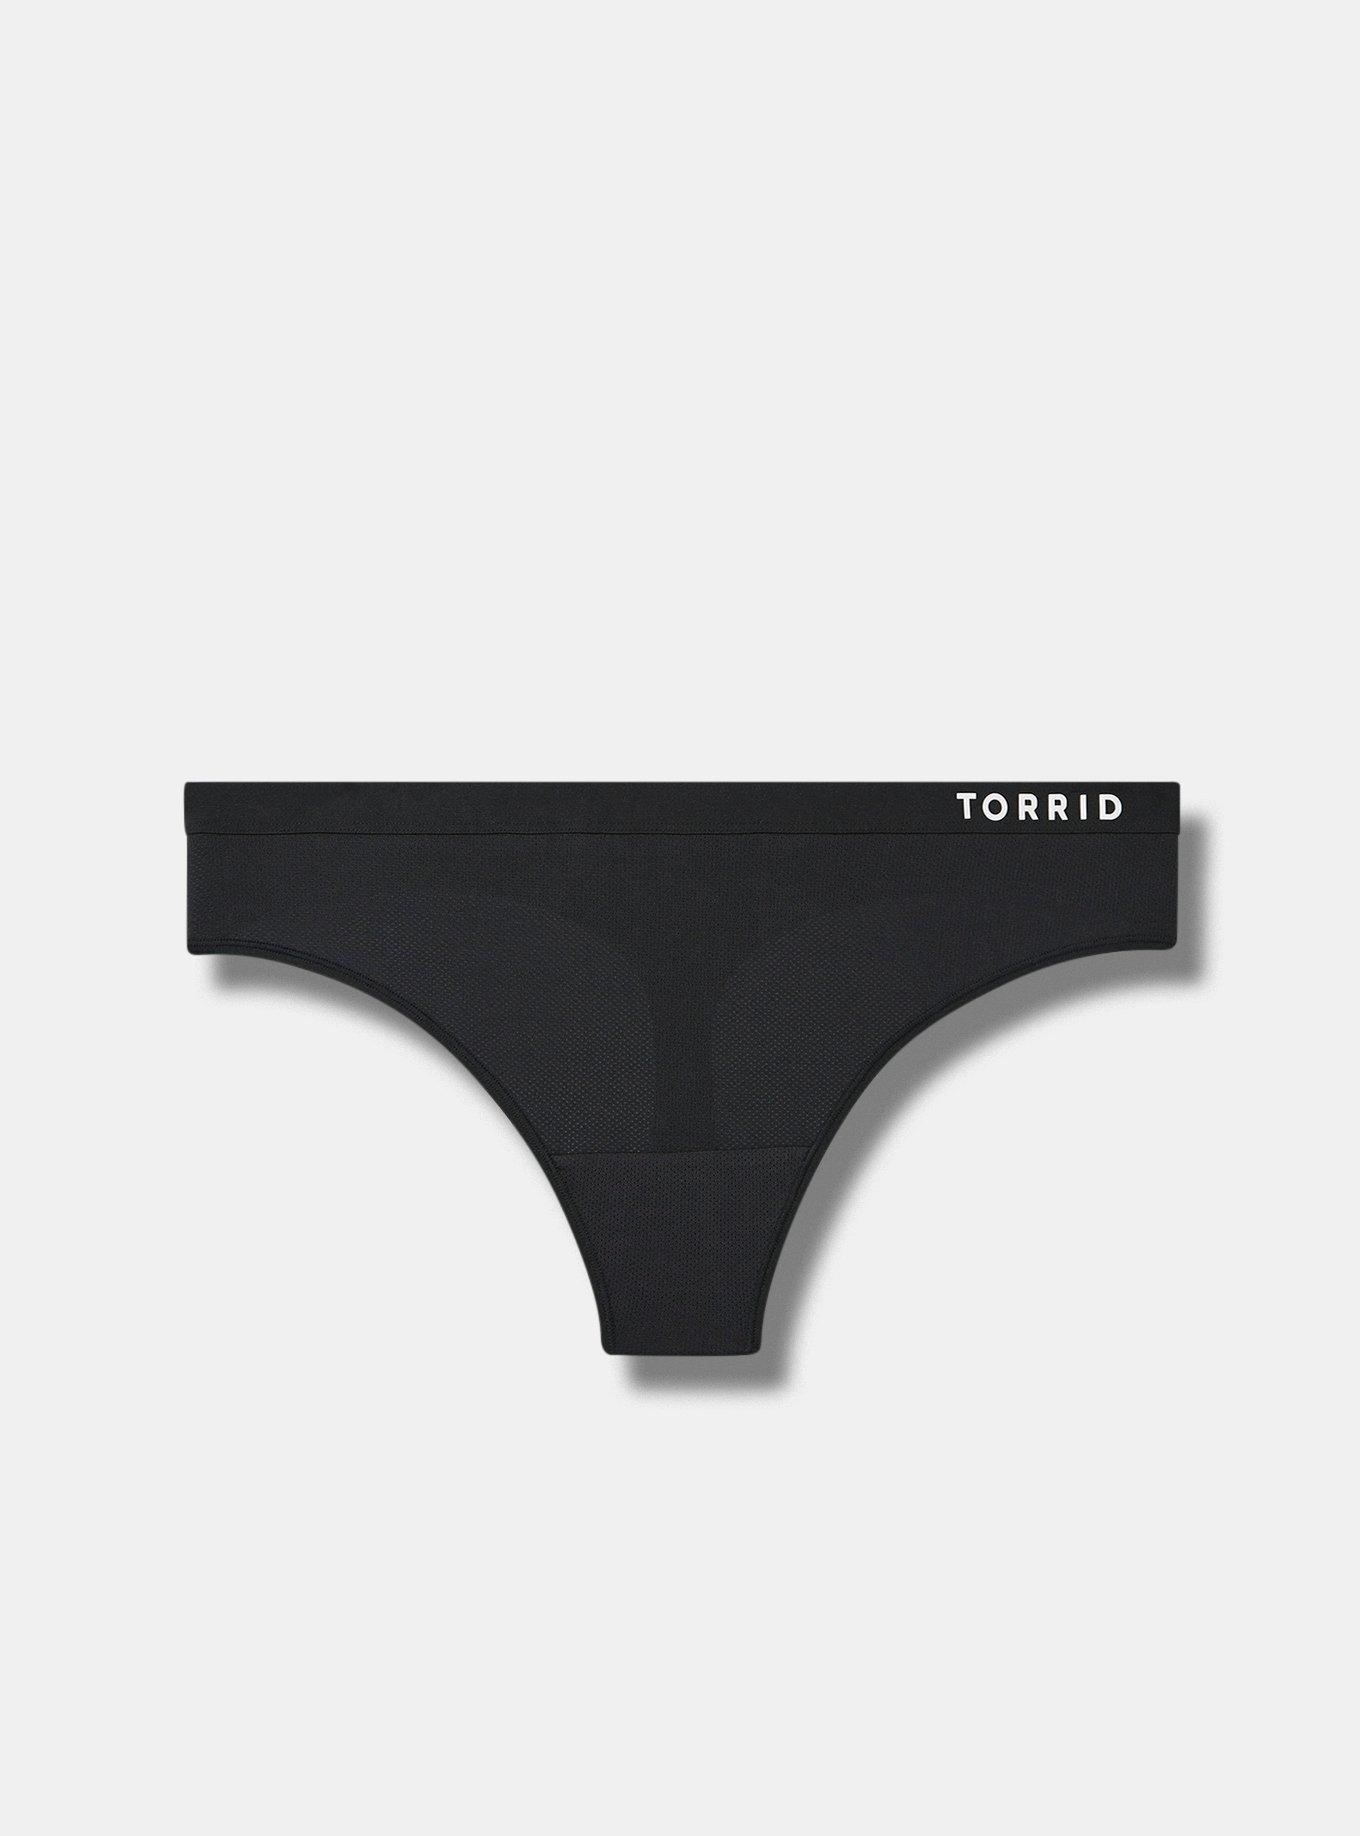 Calvin Klein Women's Thong Underwear Panty Plus Size 3x White 2 Pair Set  for sale online